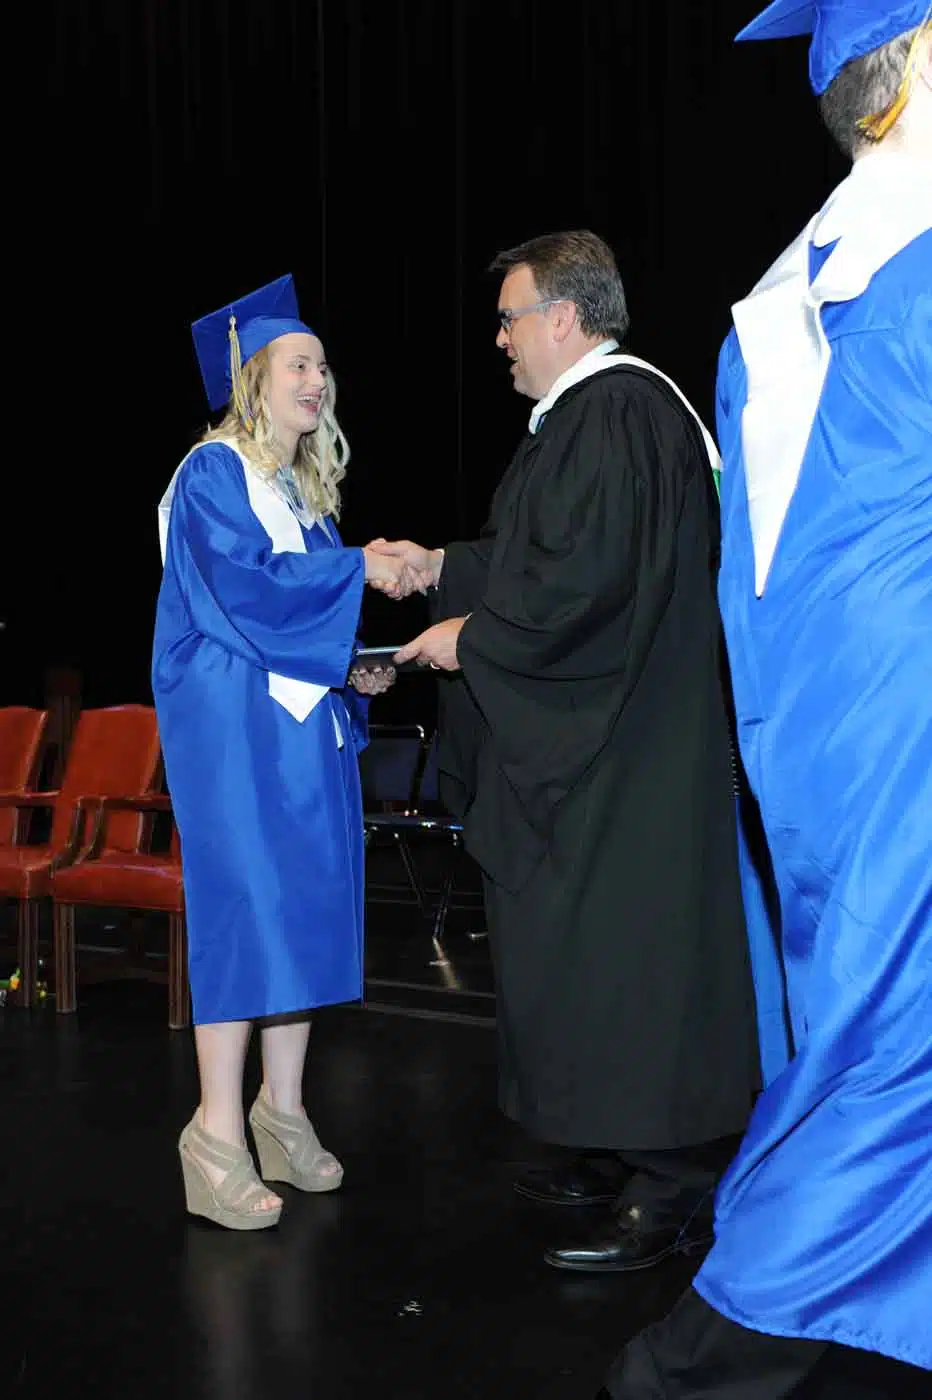 Girl receiving diploma